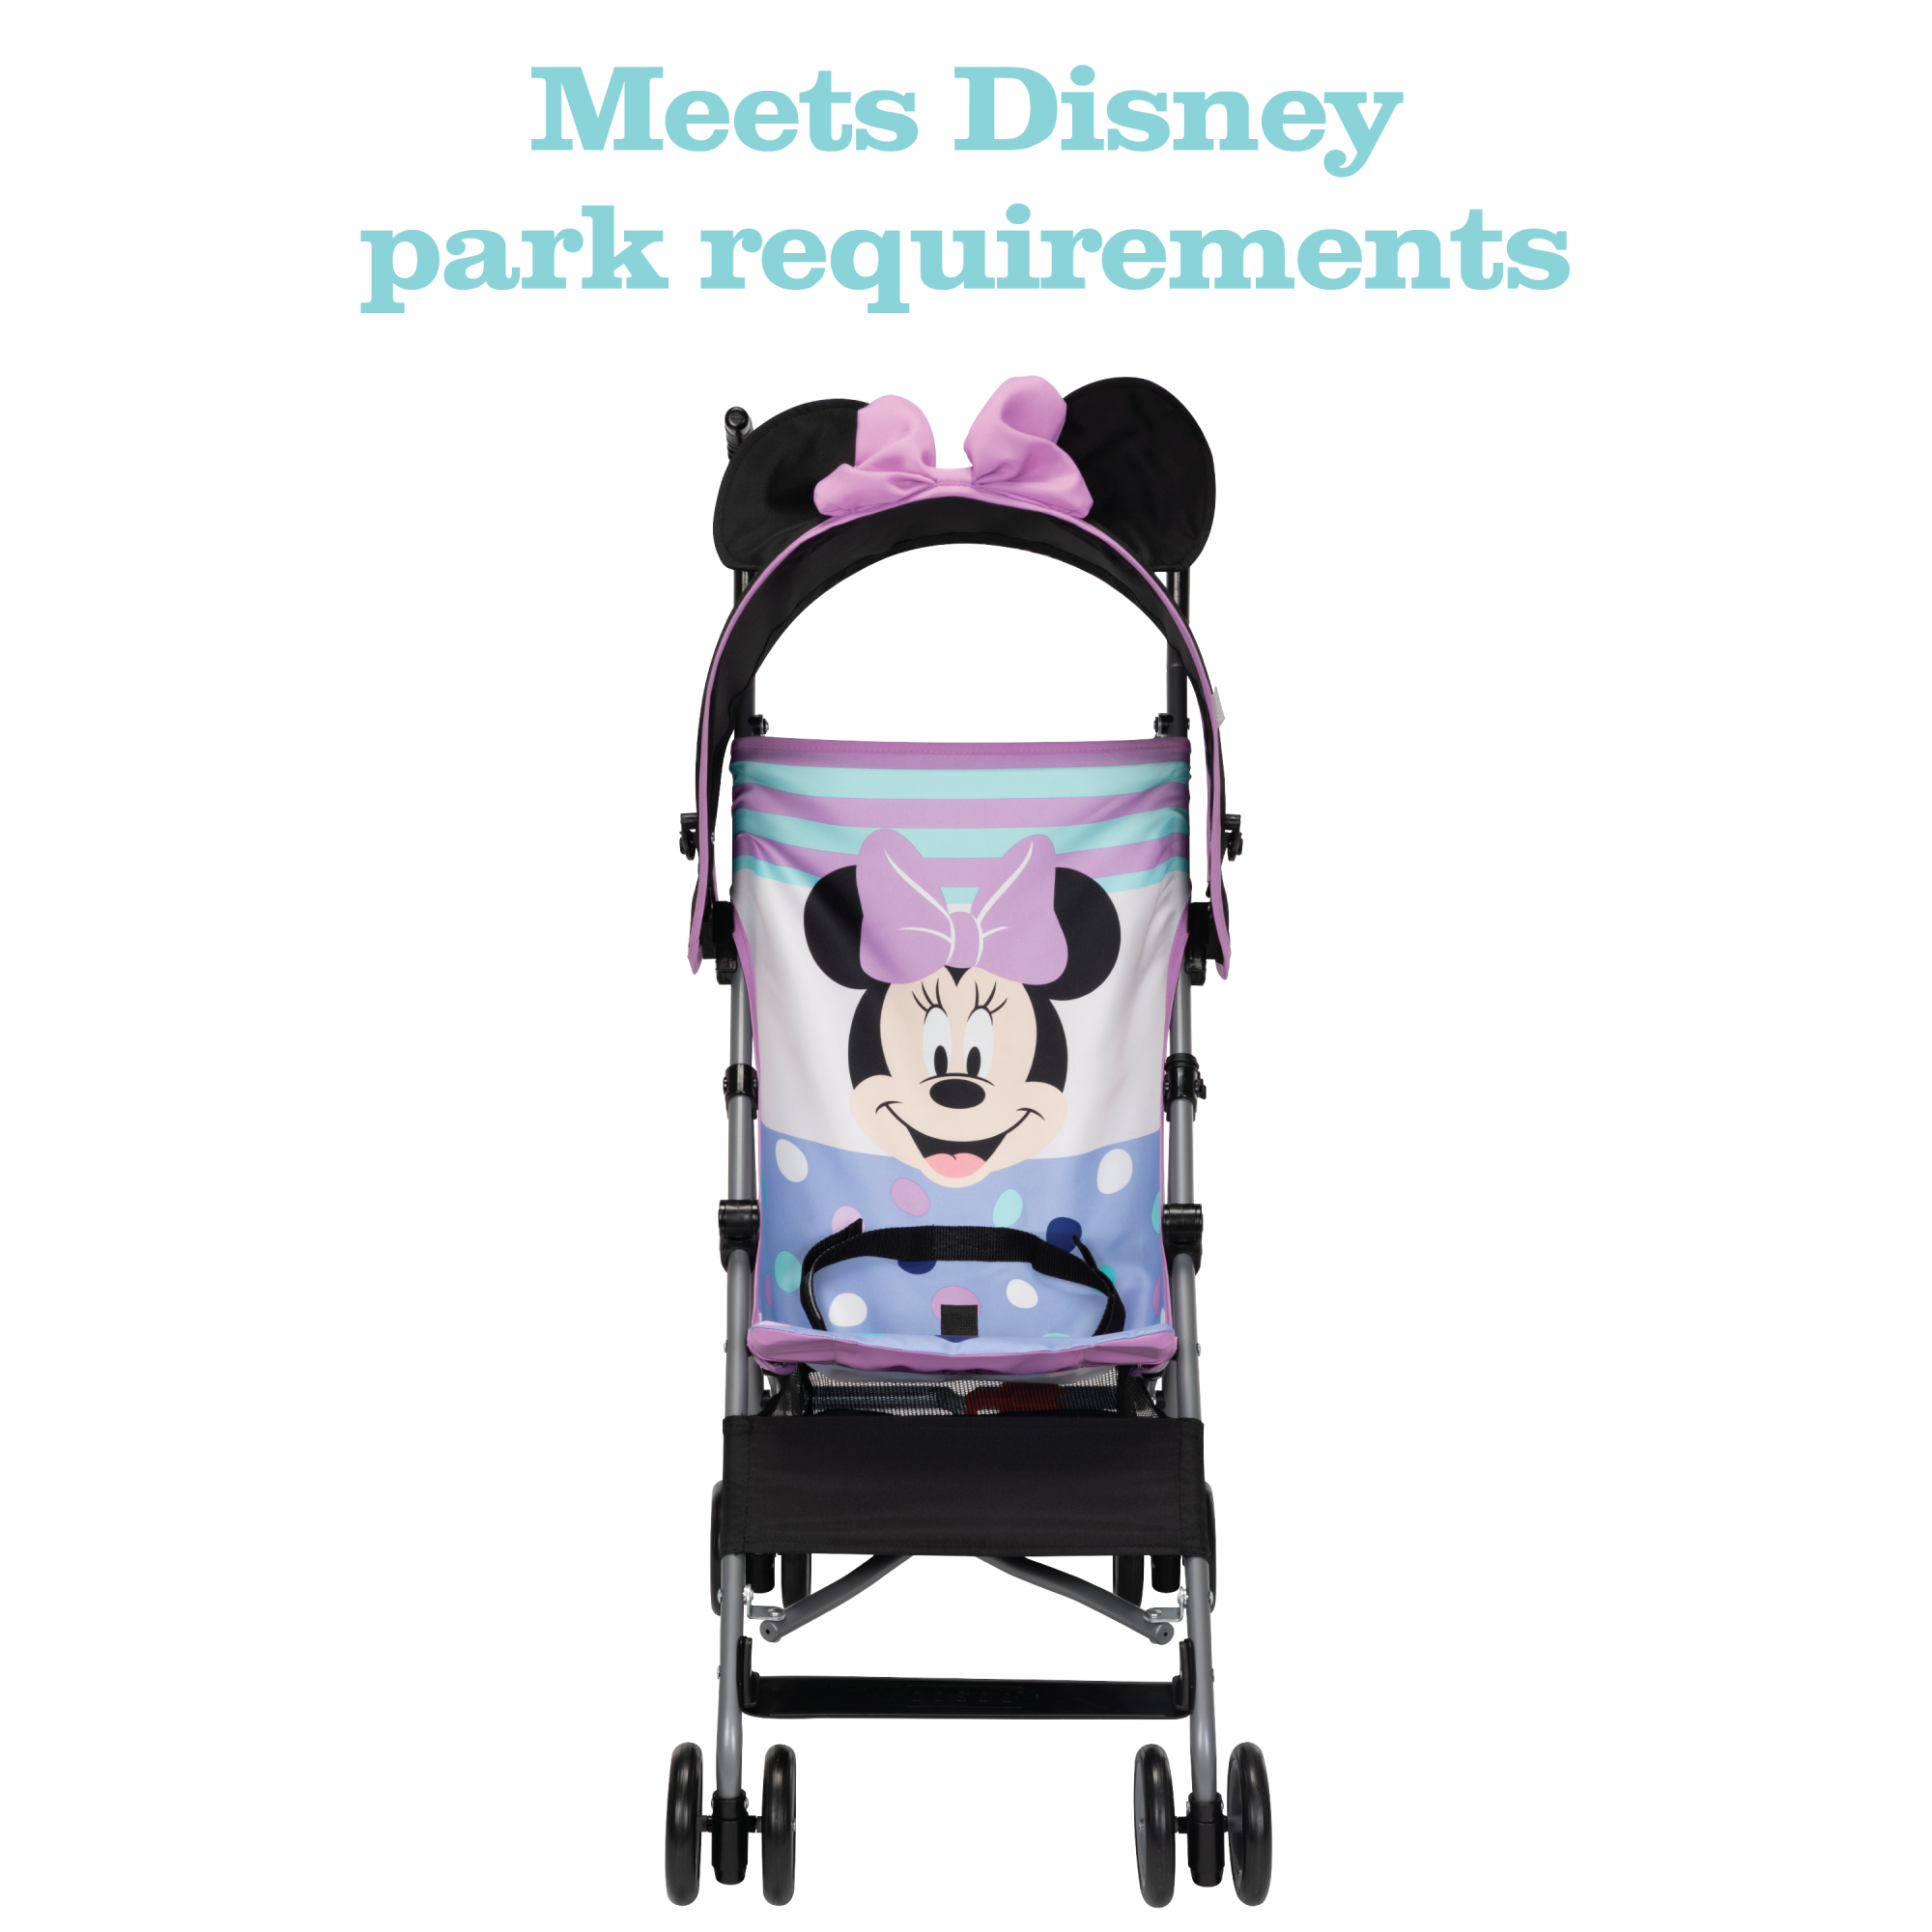 Disney Baby Character Umbrella Stroller - designed with rear-wheel parking brakes